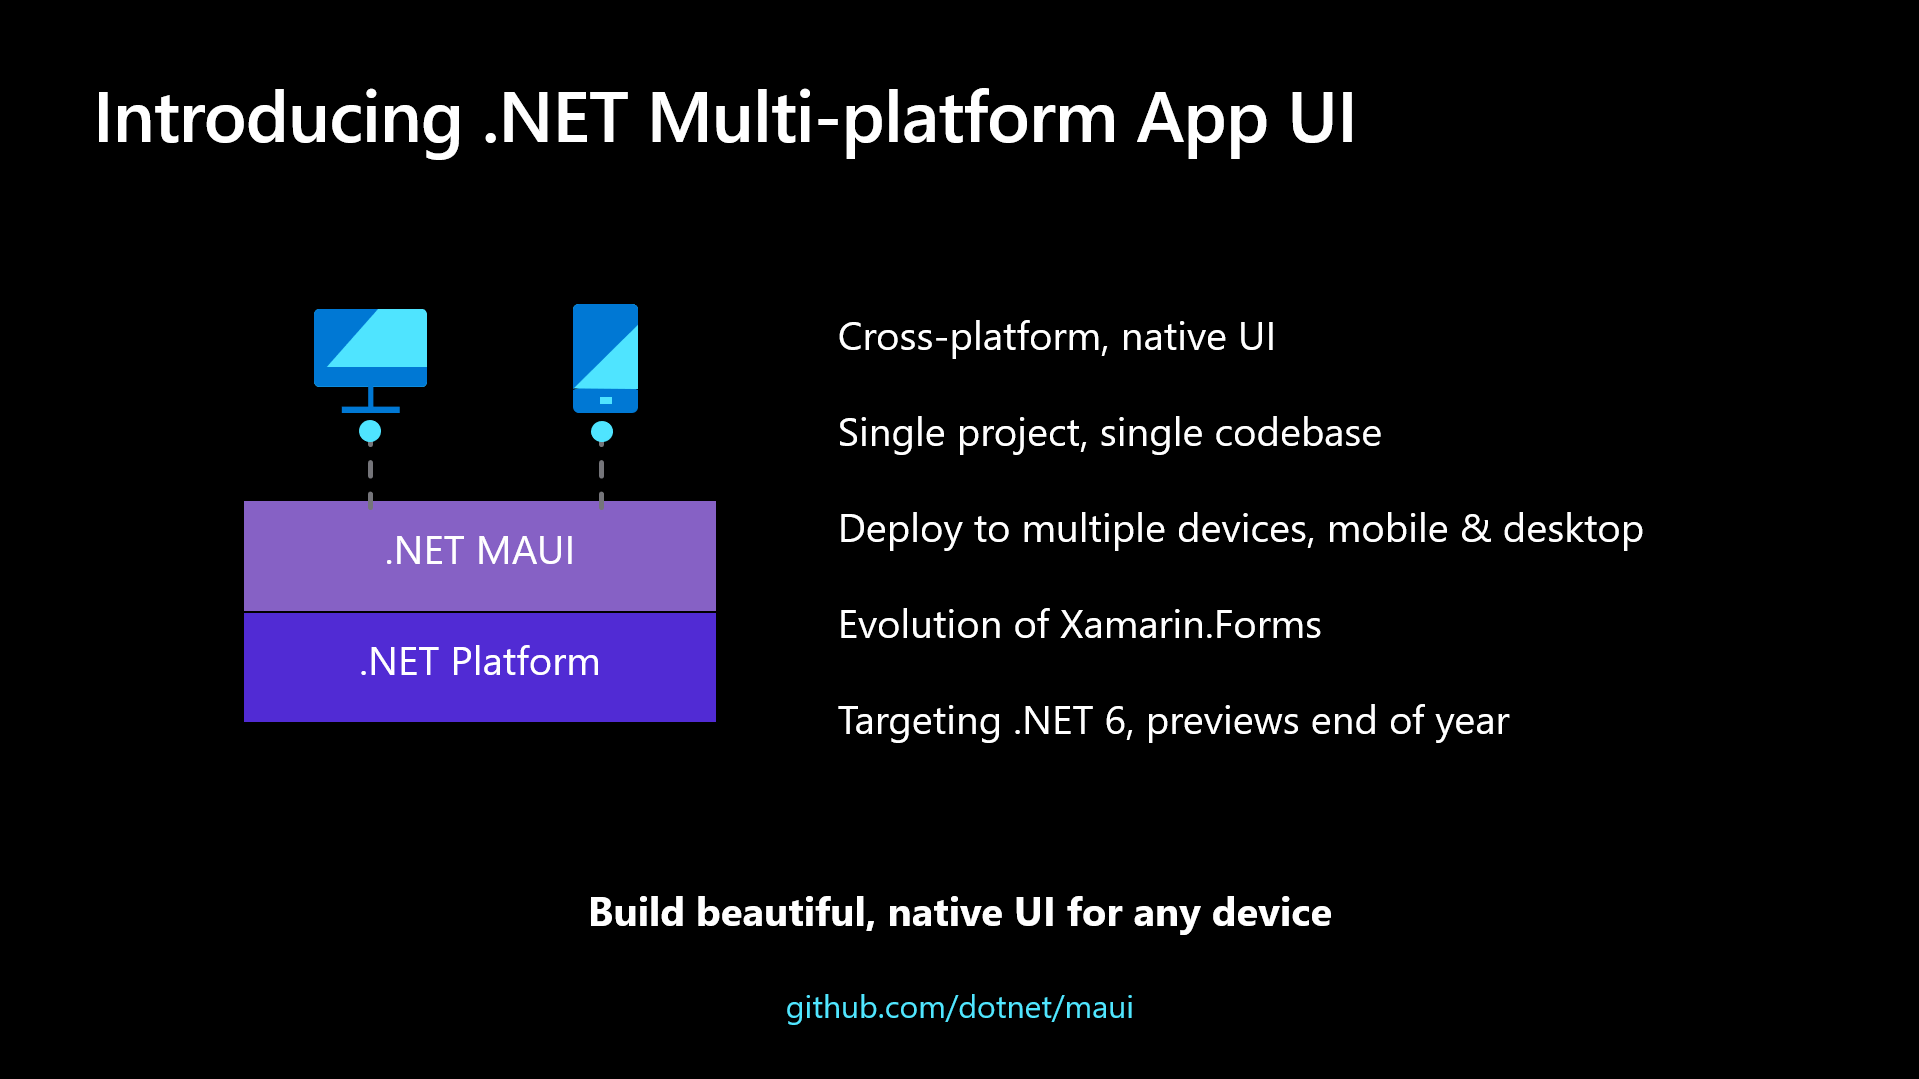 .NET Multi-platform App UI Overview